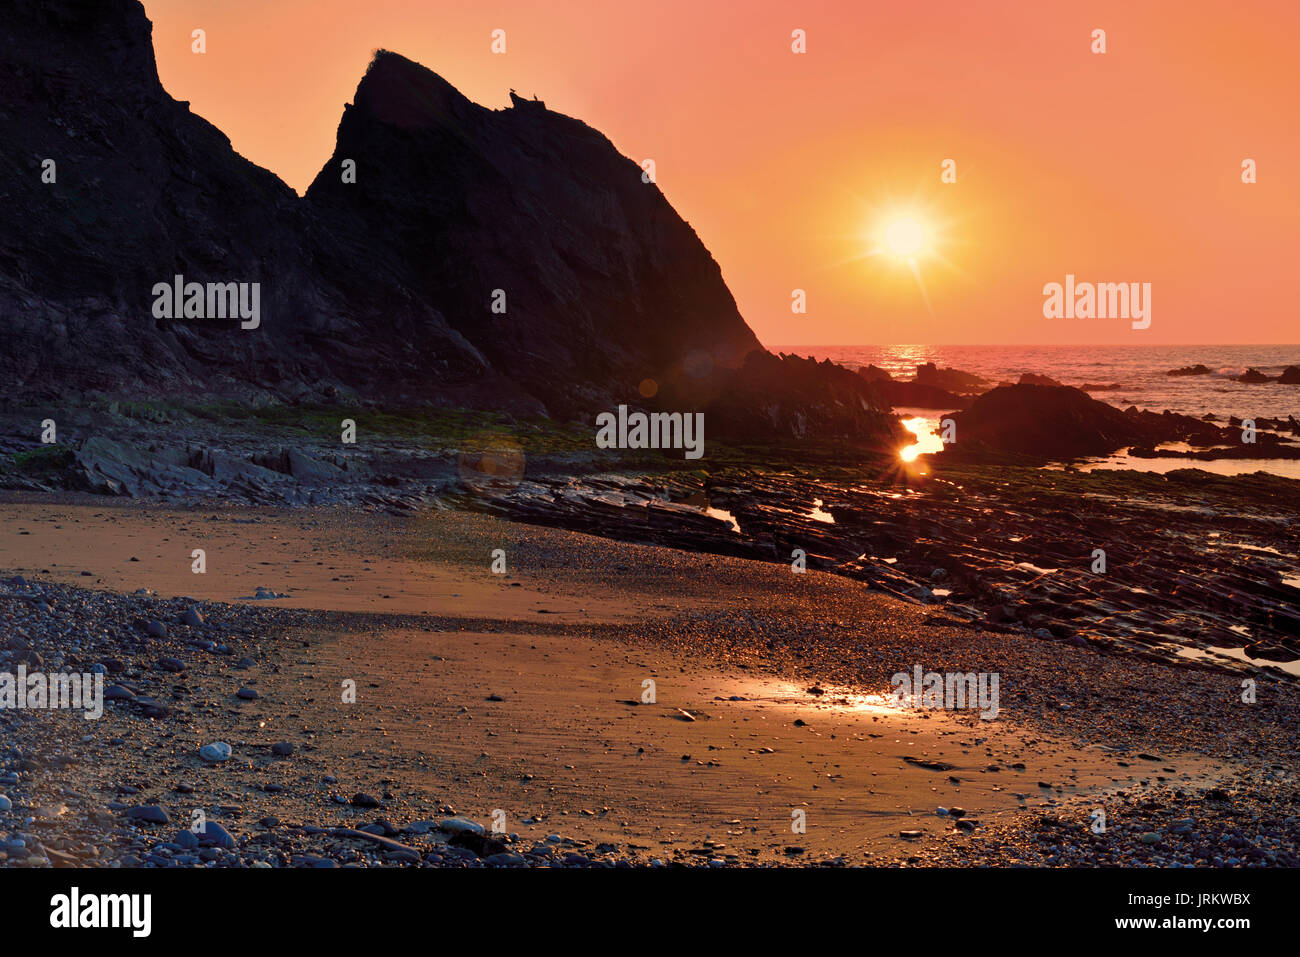 Romantic sunset at wild beach with huge rocks Stock Photo